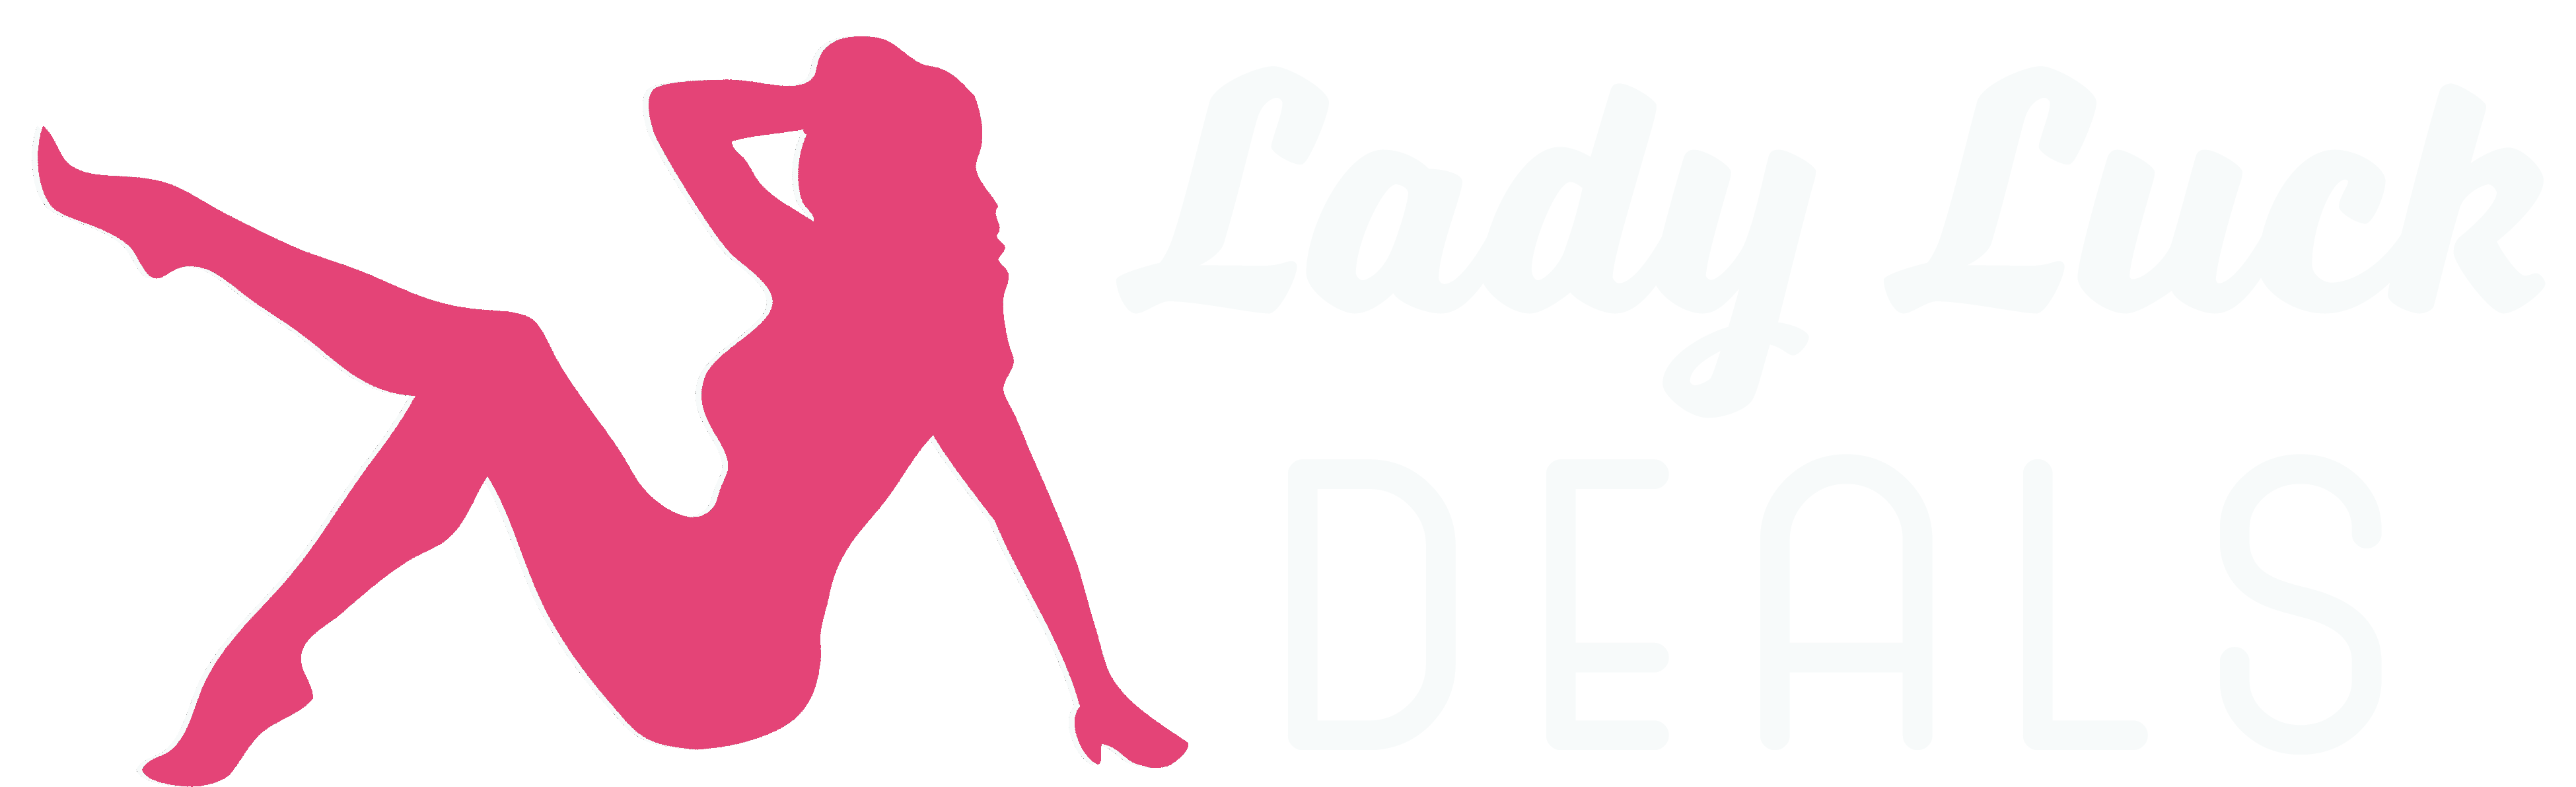 Lady Luck Deals